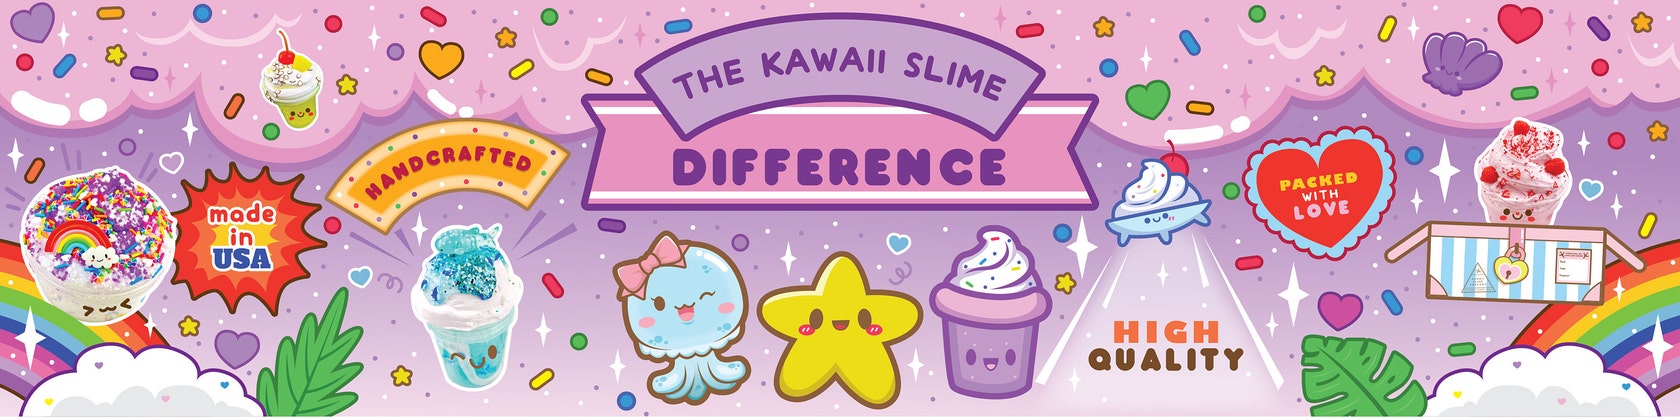 Kawaii Slime Don't Feed the Unicorns Butter Kawaii Slime